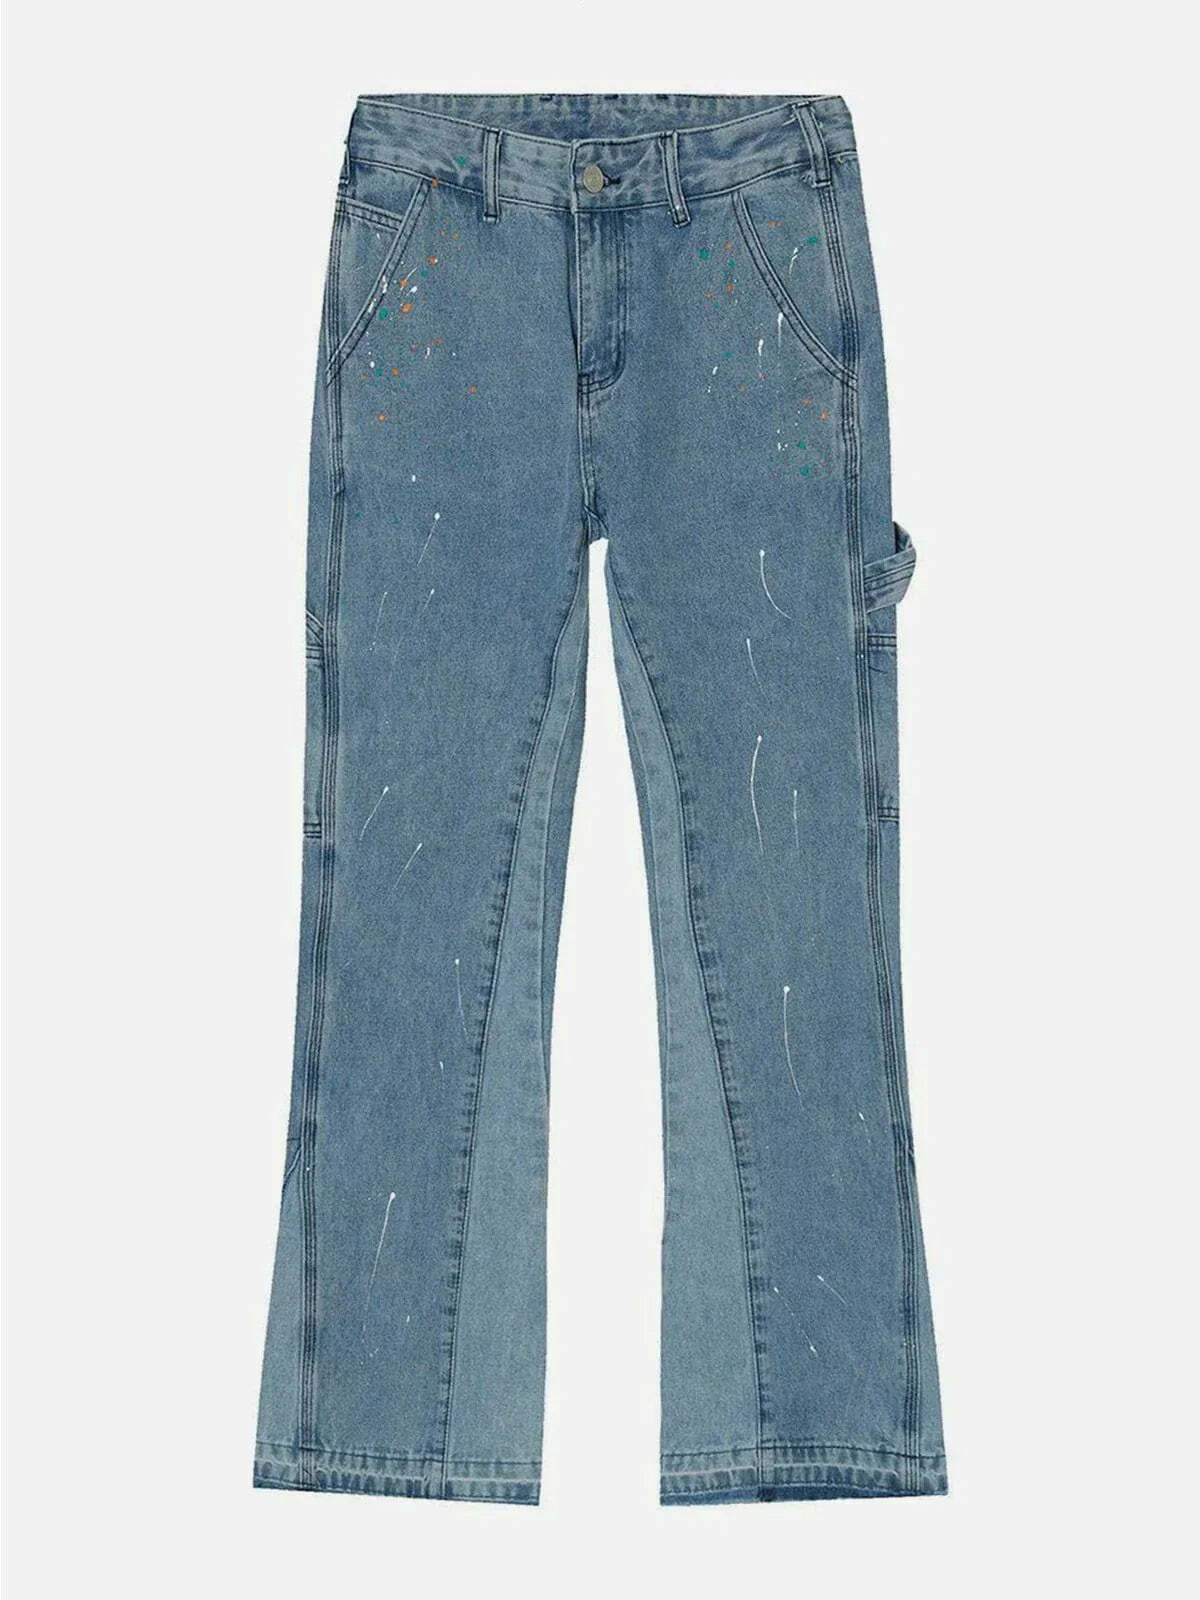 ink splash jeans edgy & vibrant streetwear 5467